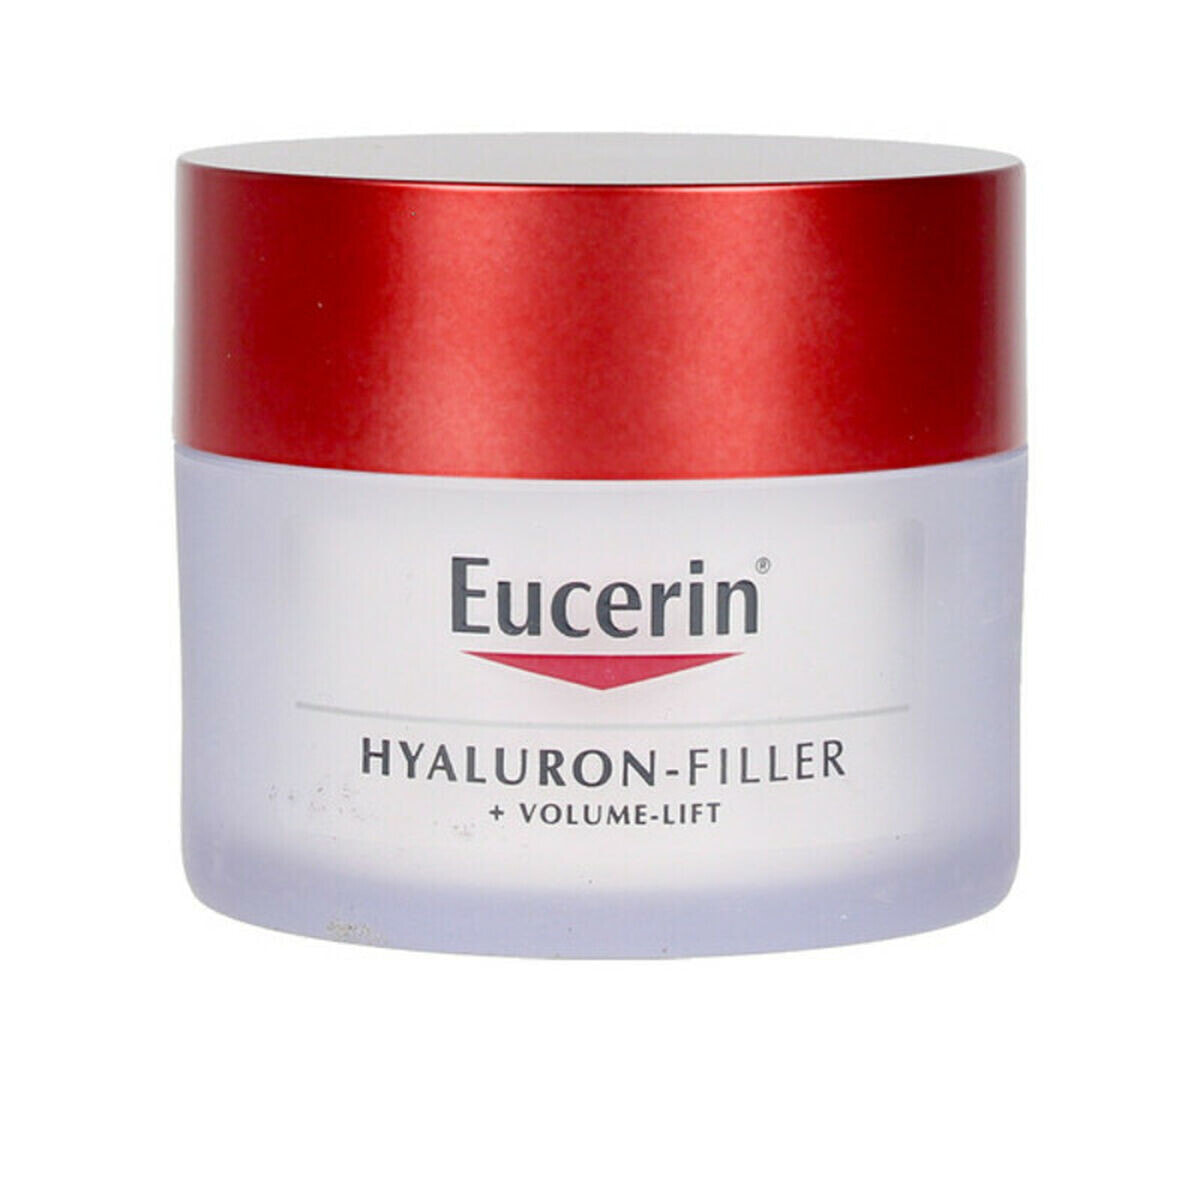 Дневной крем Hyaluron-Filler Eucerin 4279 SPF15 + PS Spf 15 50 ml (50 ml)